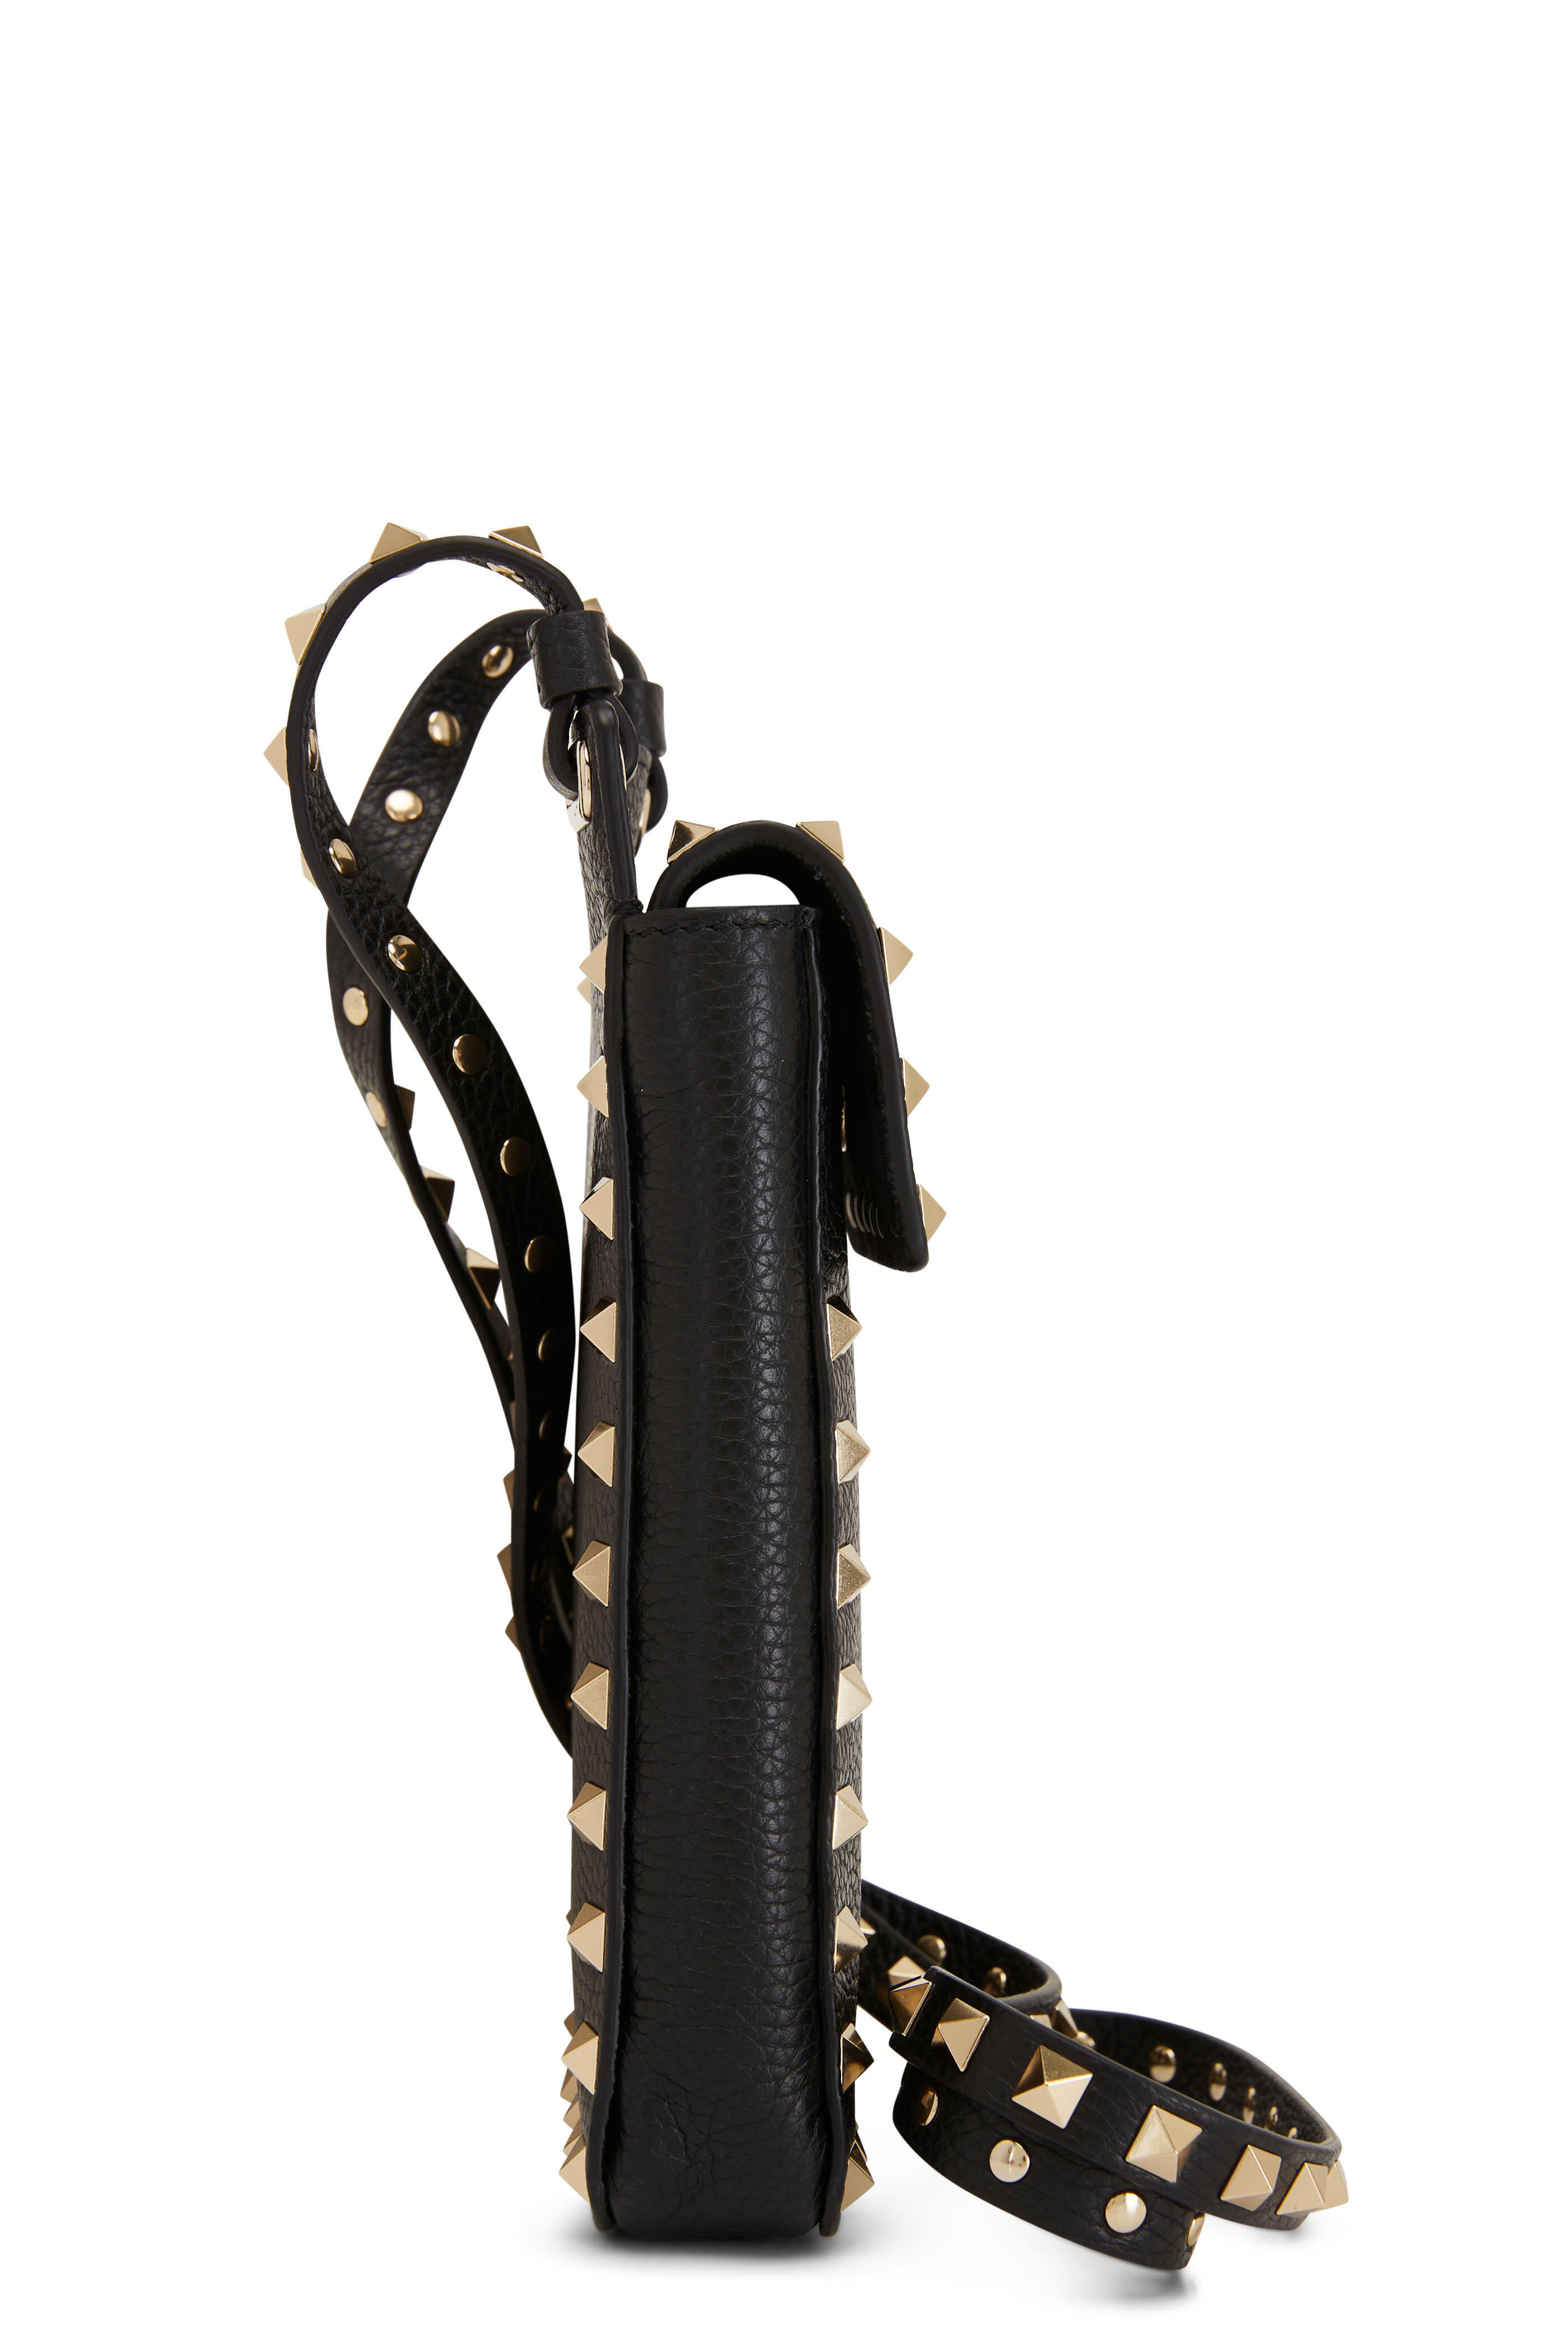 Valentino Garavani Rockstud Black Leather Crossbody Phone Holder Bag